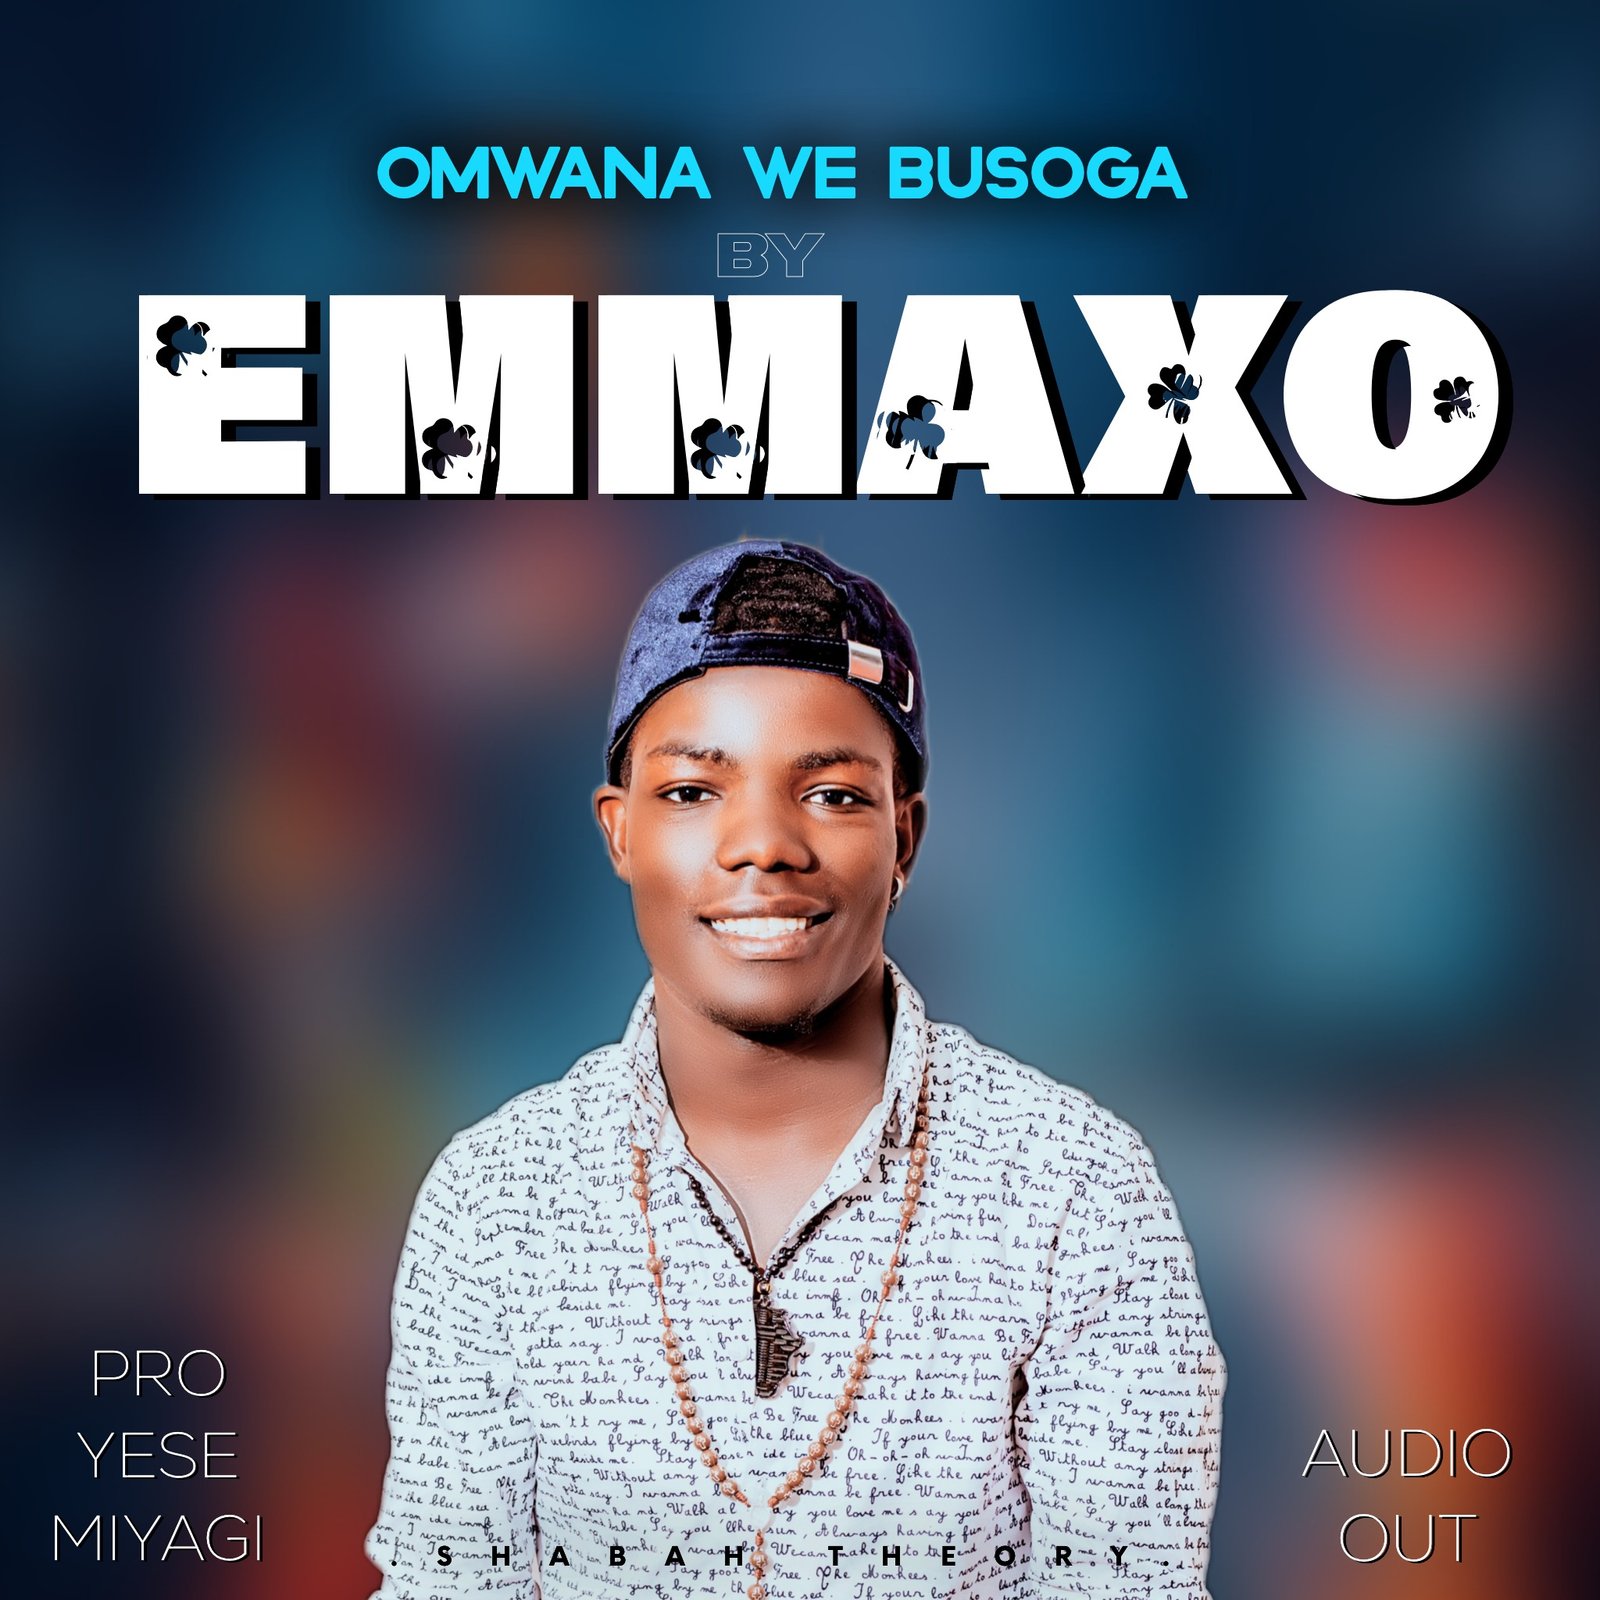 Emmaxo Official Latest Songs Videos Artist News Lyrics And Biography On Ugamusicug 